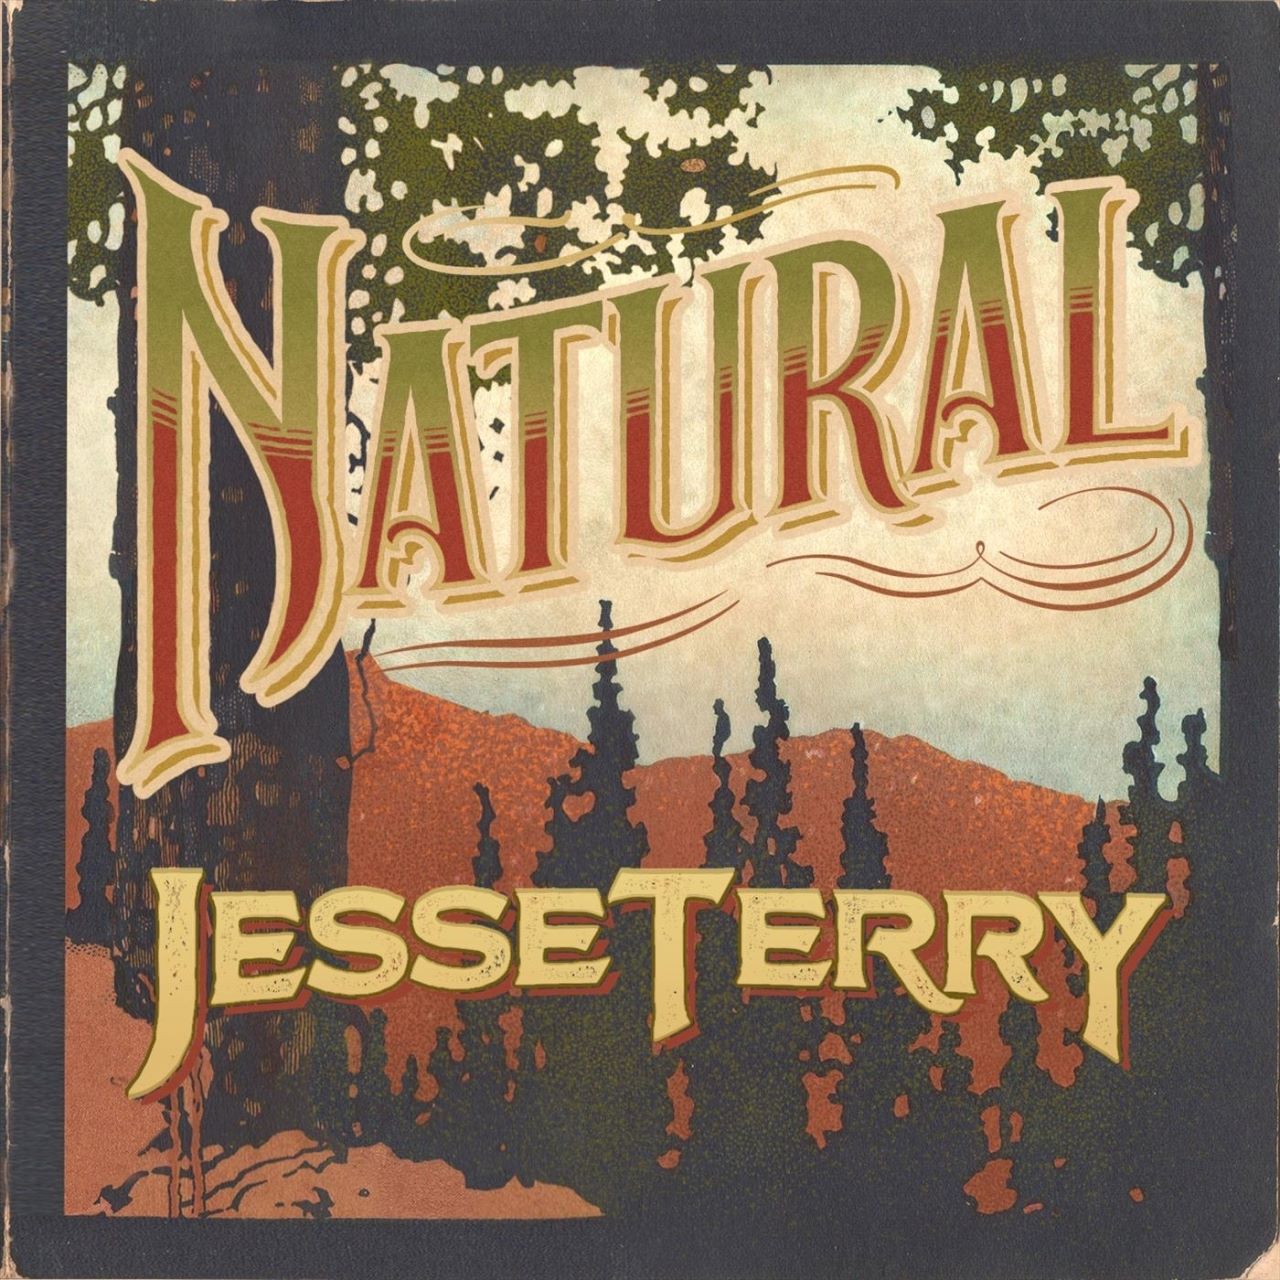 Jesse Terry - Natural cover album